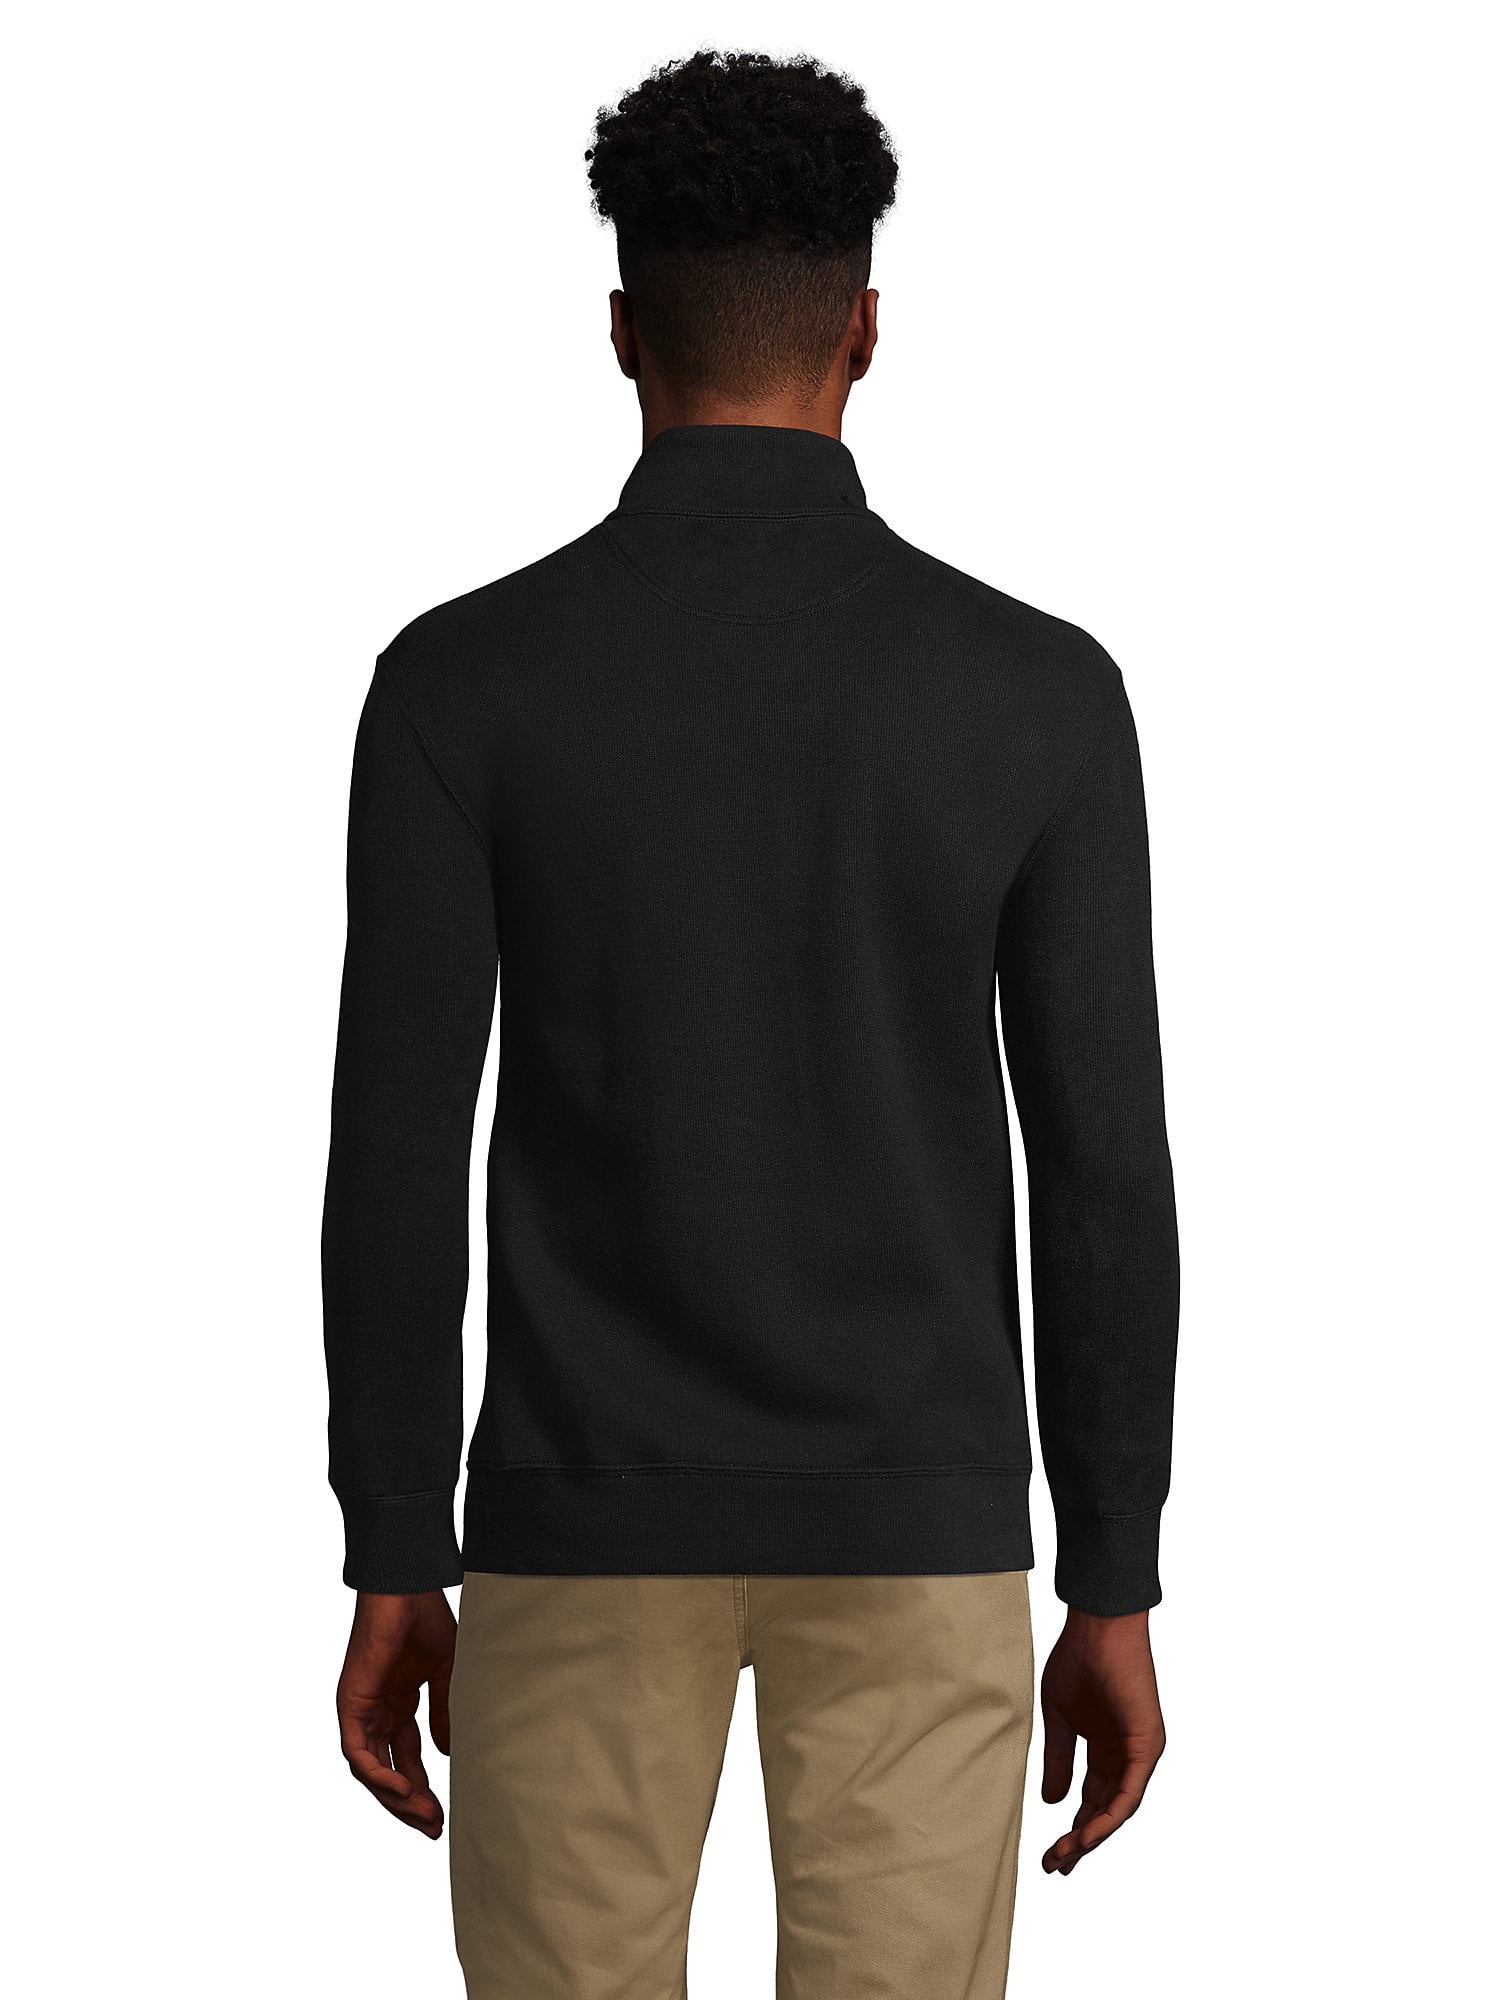 Lands' End School Uniform Men's Bedford Rib Quarter Zip Sweater